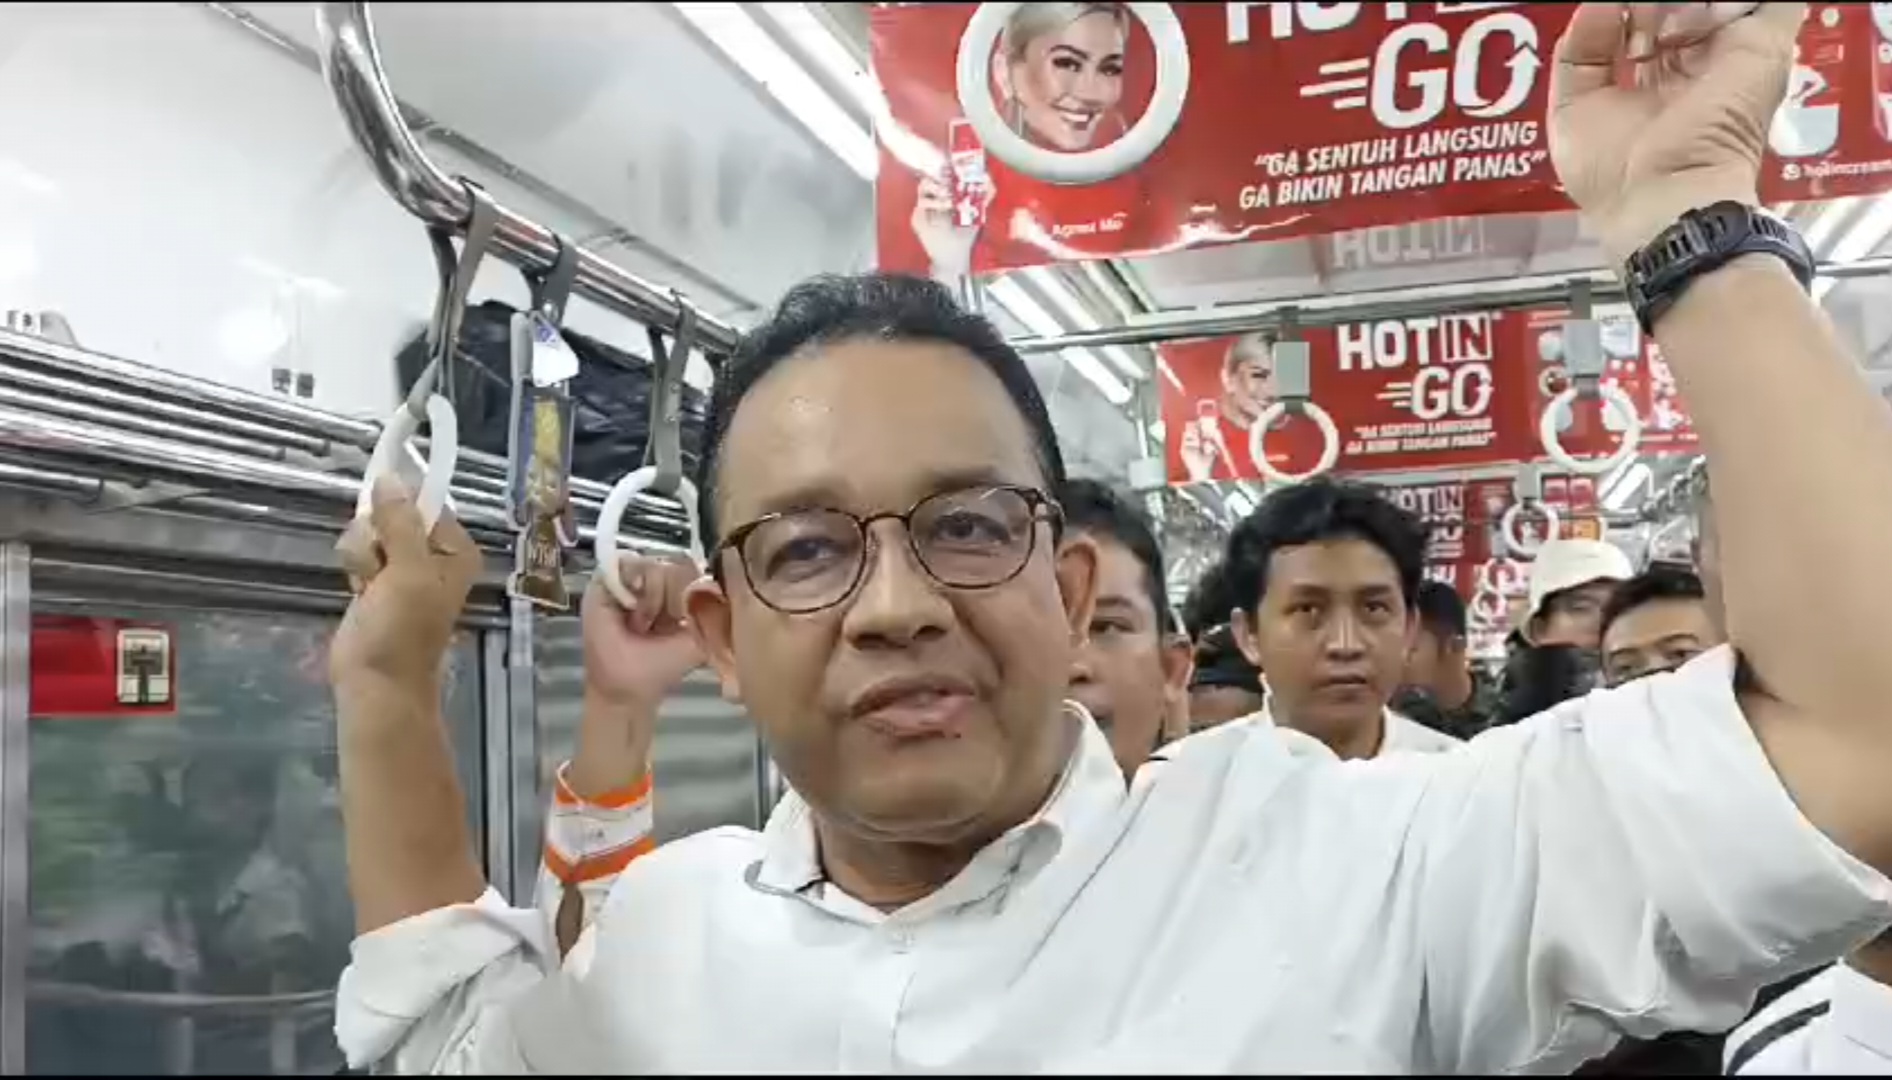 Anies Baswedan Ingin Buat Rel Banjarmasin-Banjarbaru Jika Menang Pilpres 2024 